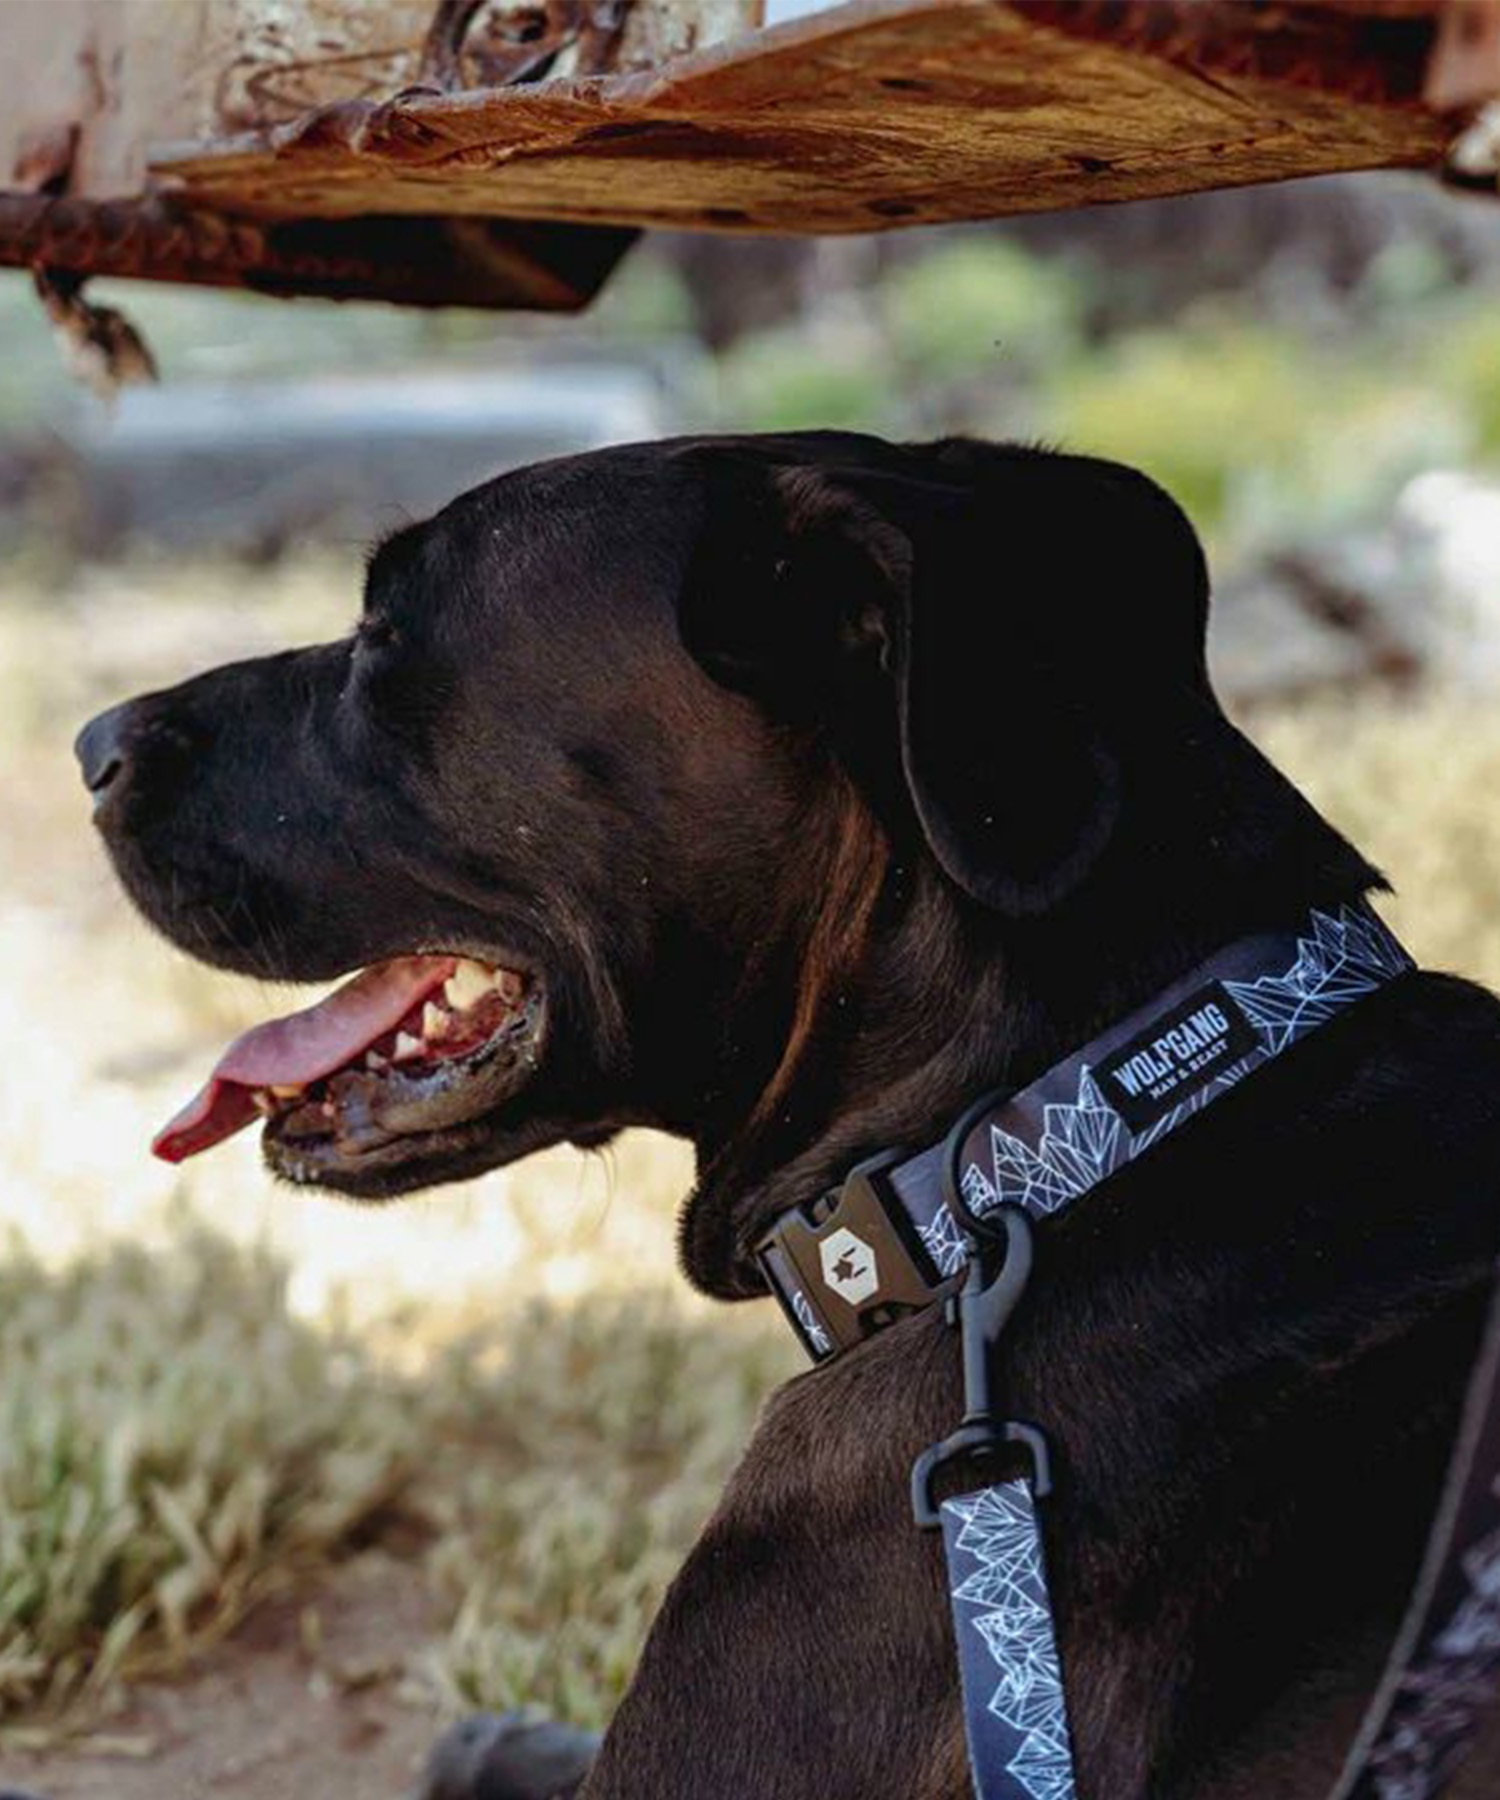 WOLFGANG ウルフギャング 犬用 首輪 WolfMountain Collar Lサイズ 中型犬用 大型犬用 ウルフマウンテン カラー グレー系 WC-003-83(GY-L)